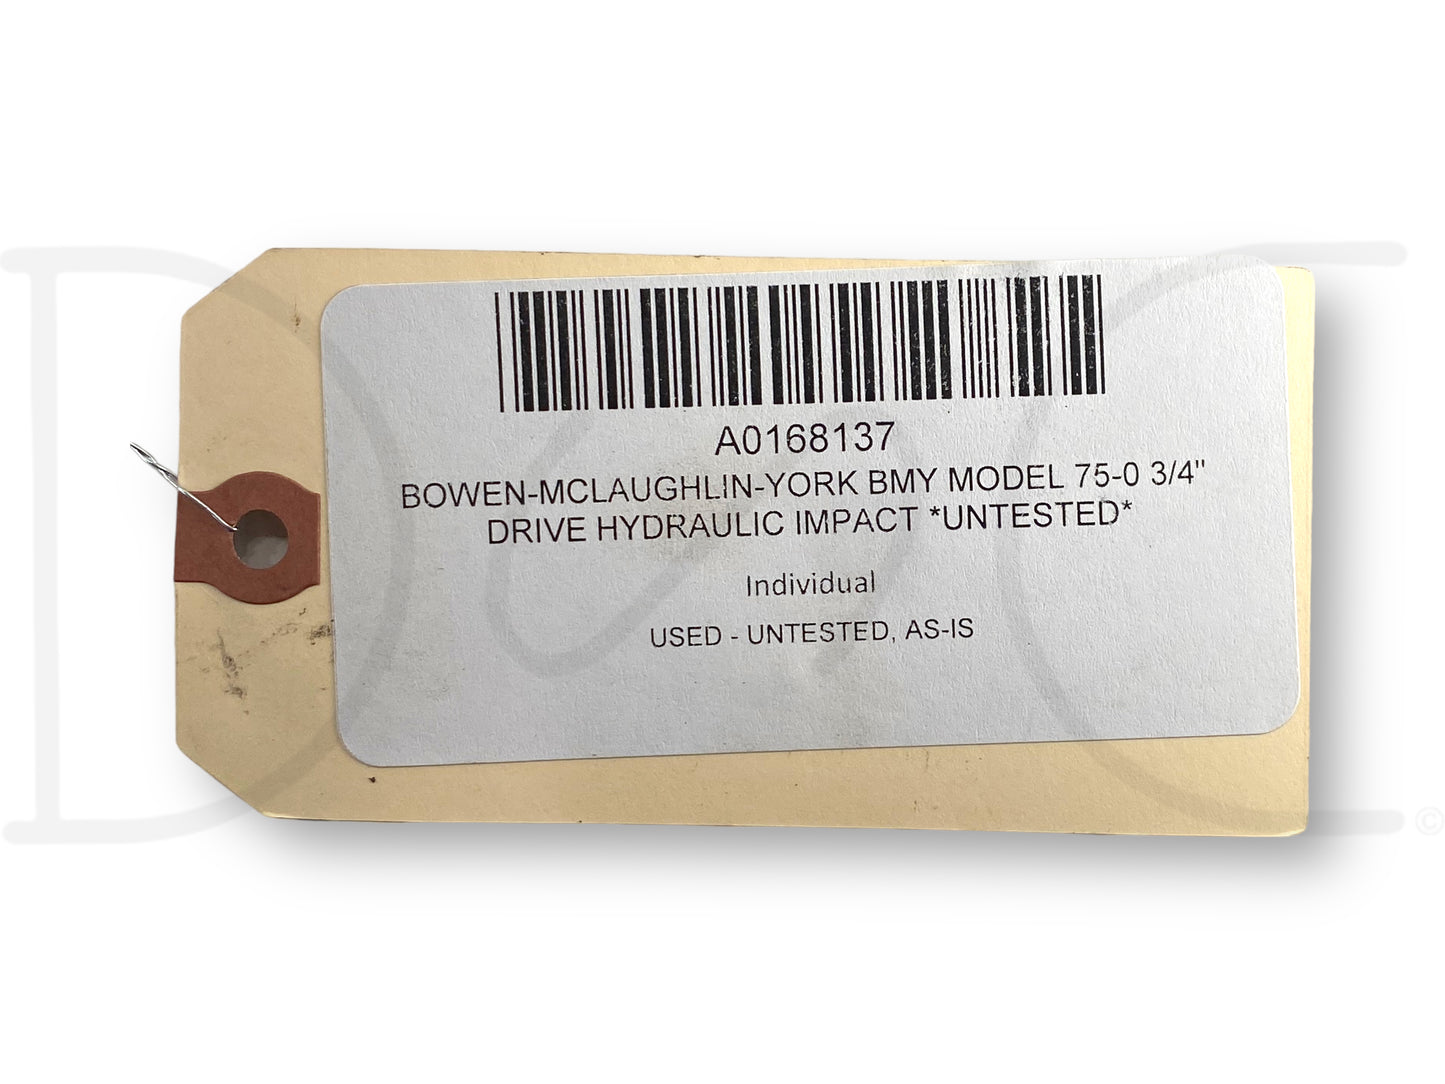 Bowen-Mclaughlin-York Bmy Model 75-0 3/4" Drive Hydraulic Impact *Untested*